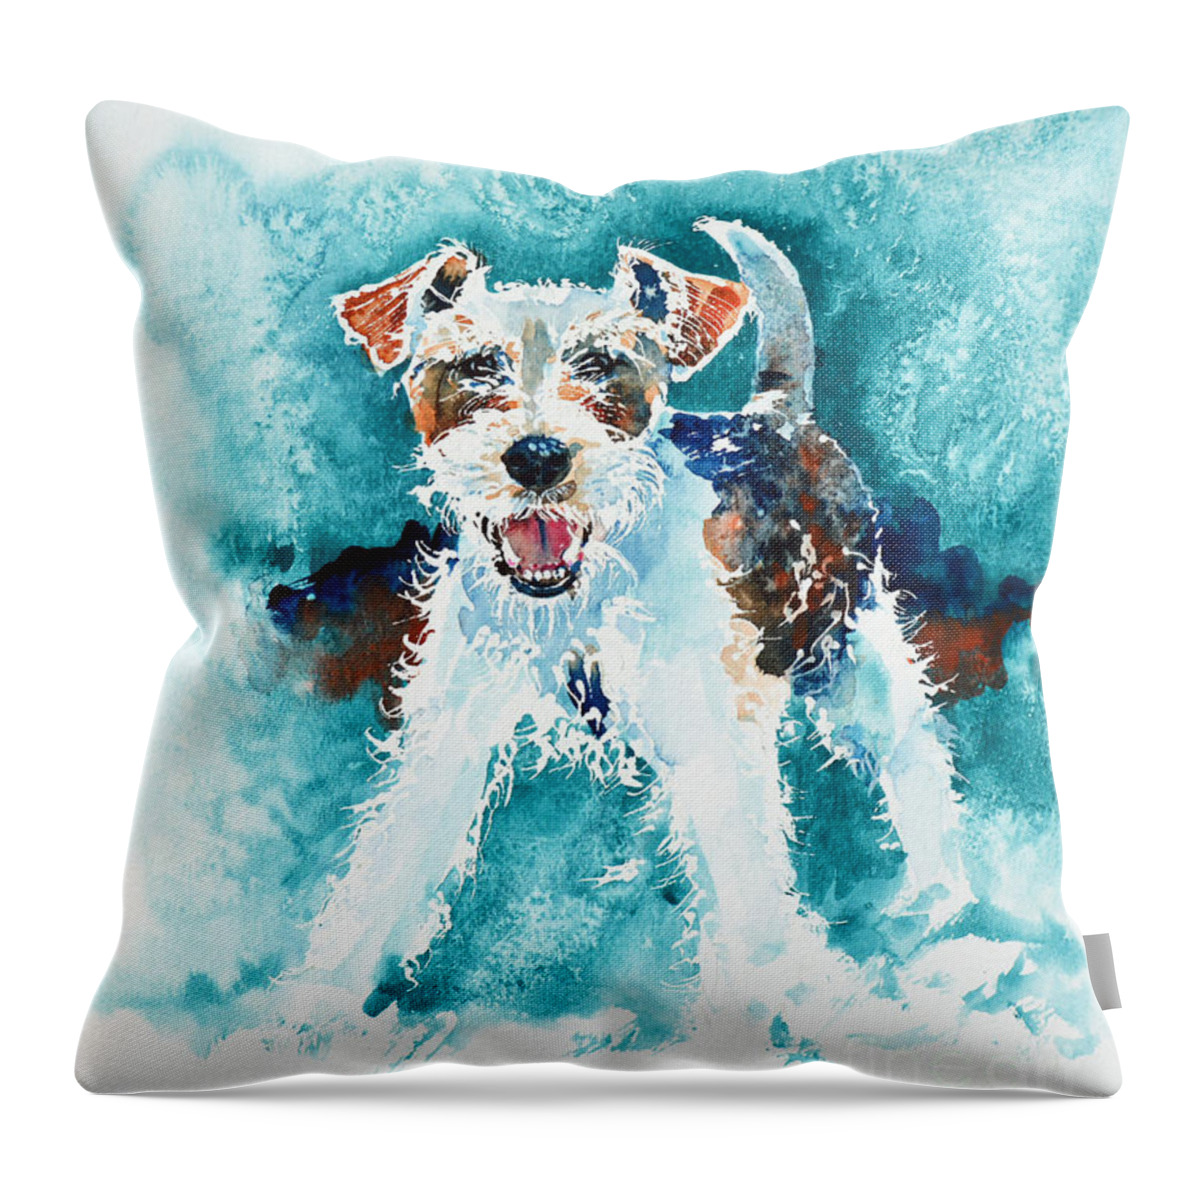 Wire Fox Terrier Throw Pillow featuring the painting Wire Fox Terrier by Zaira Dzhaubaeva